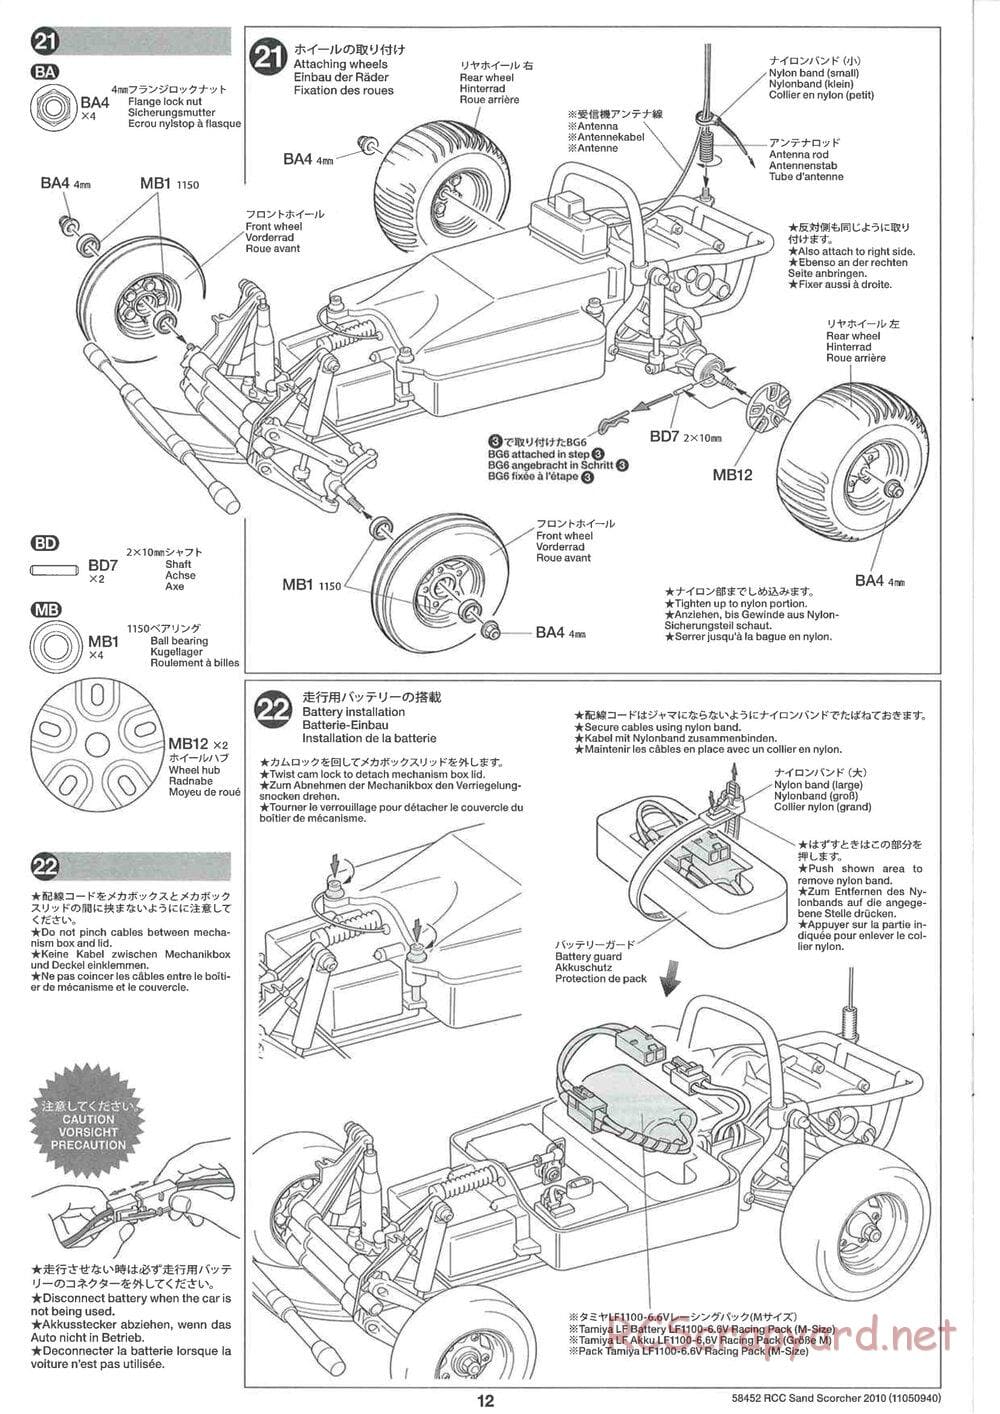 Tamiya - Sand Scorcher 2010 - SRB v1 Chassis - Manual - Page 12